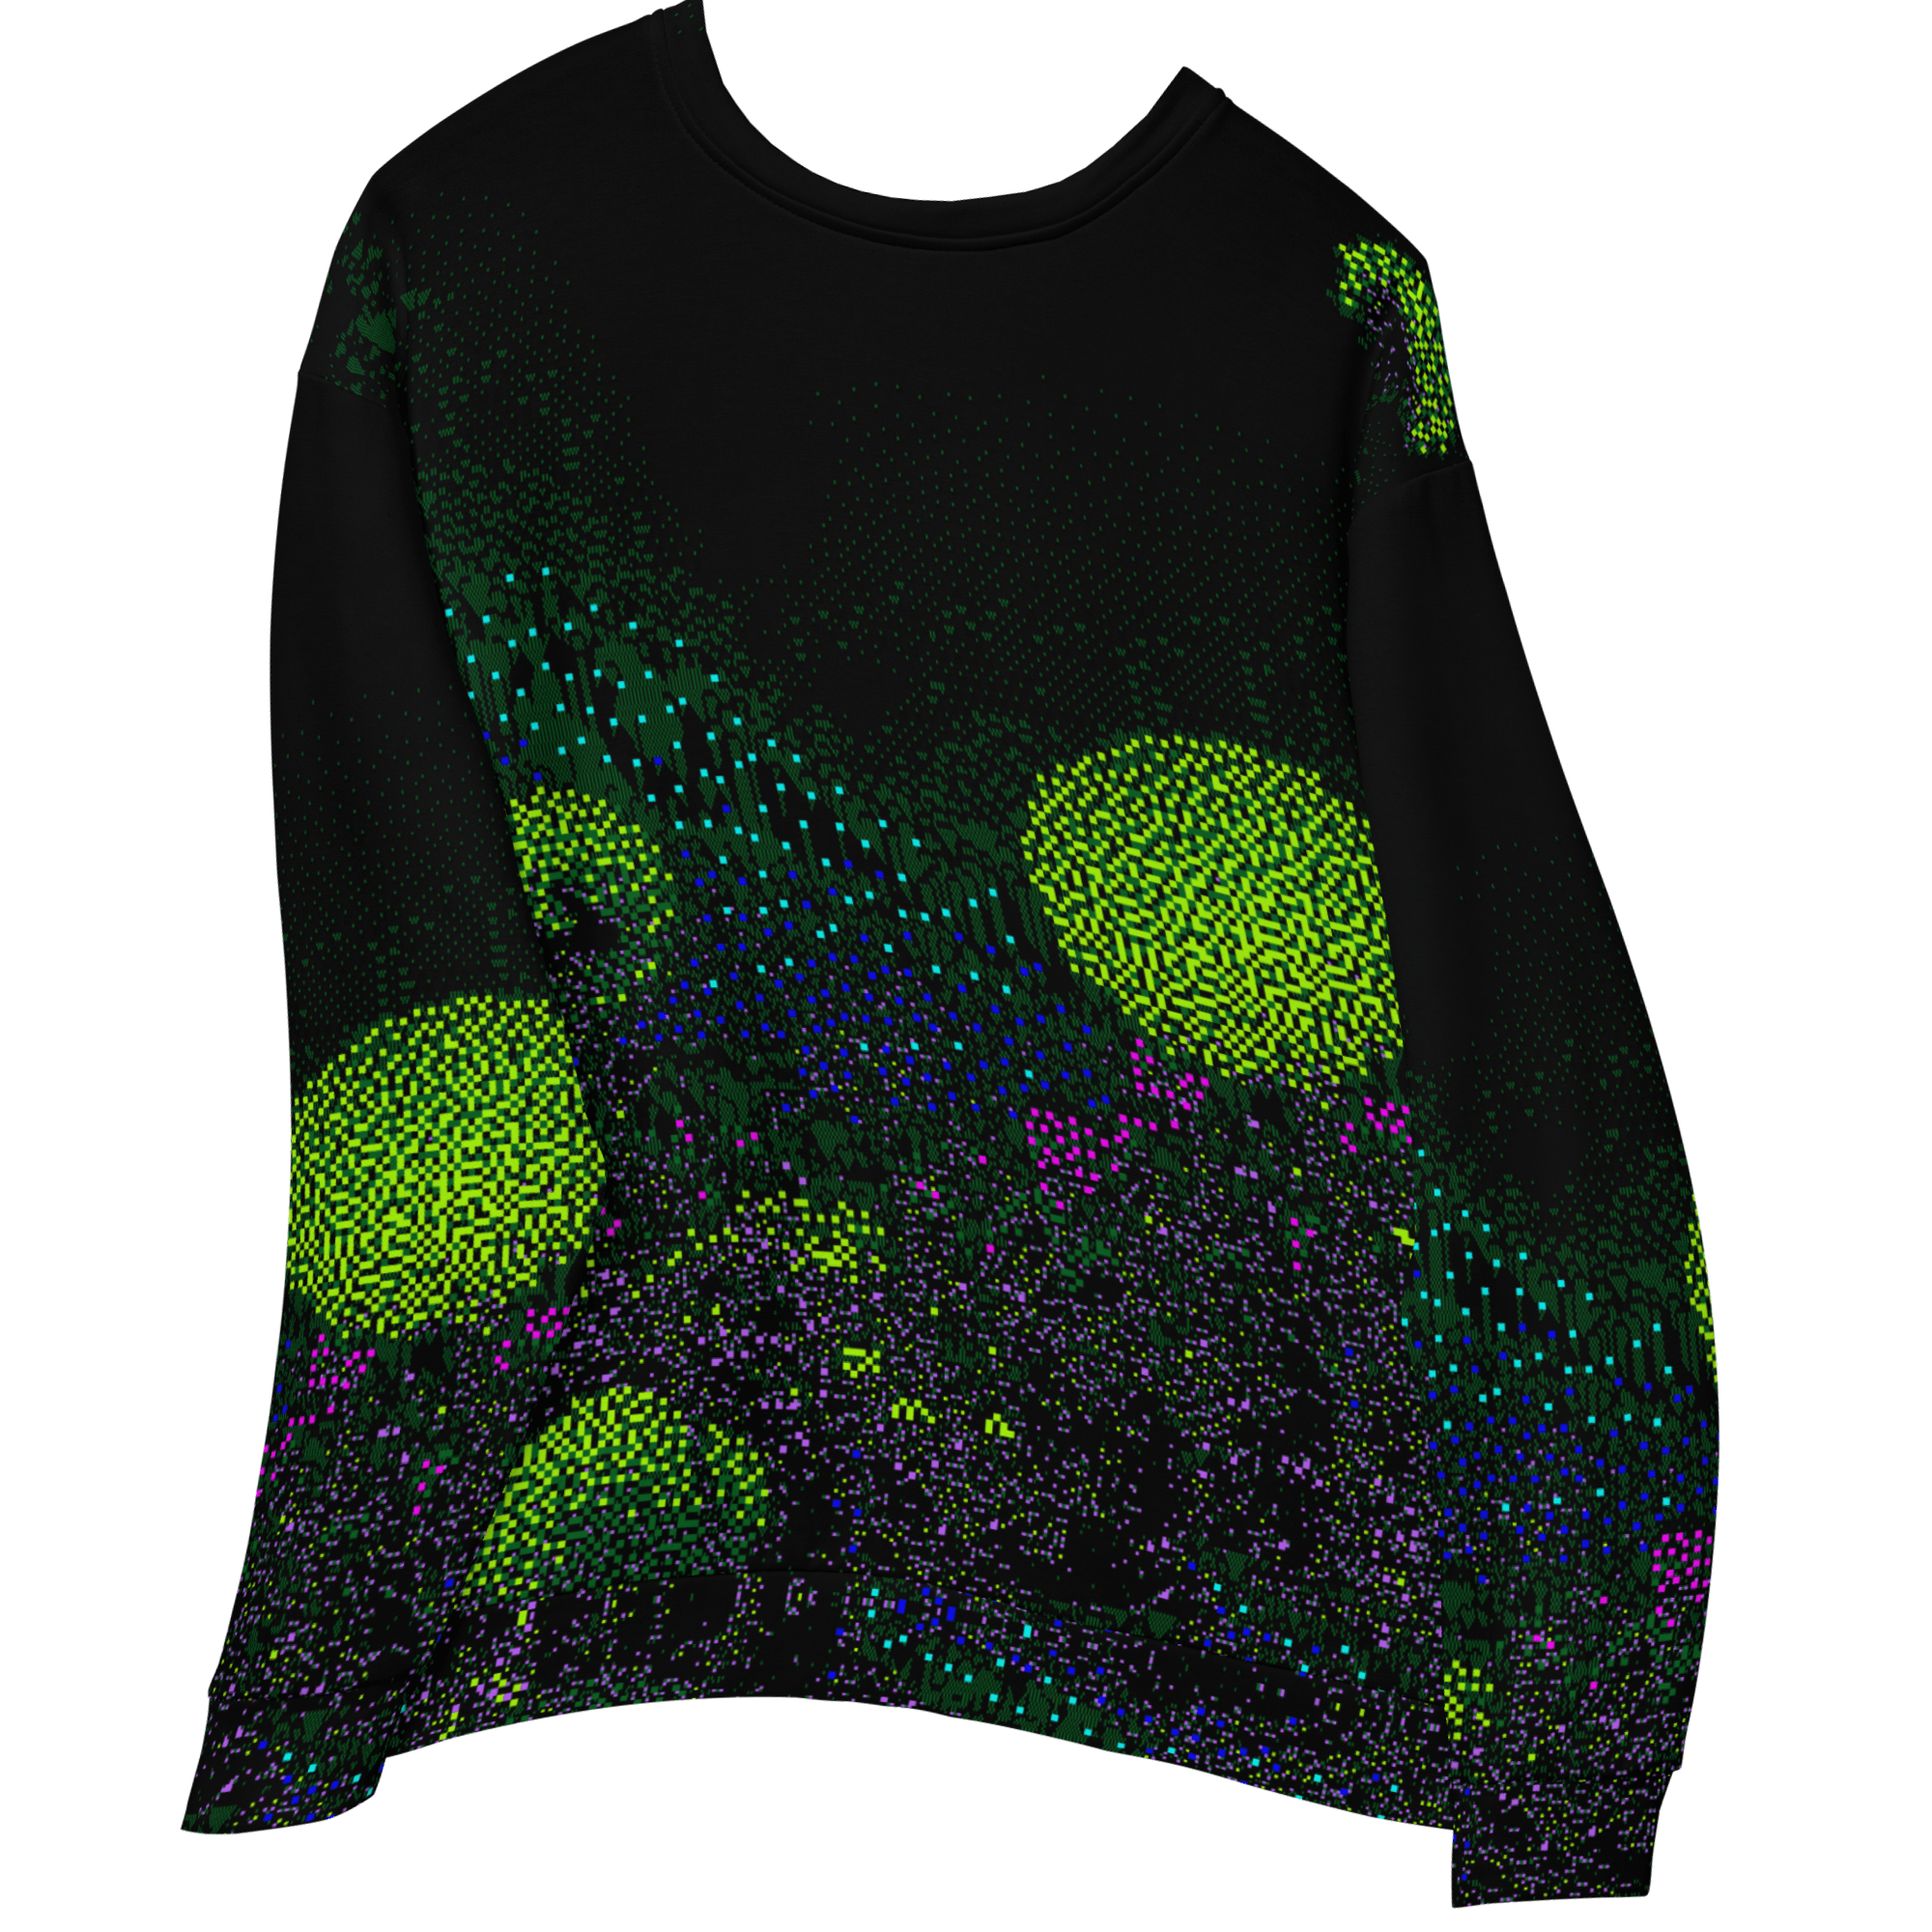 Nokturnal Magical Garden® Sweatshirt (7/7 pieces for sale) - Kikillo Club